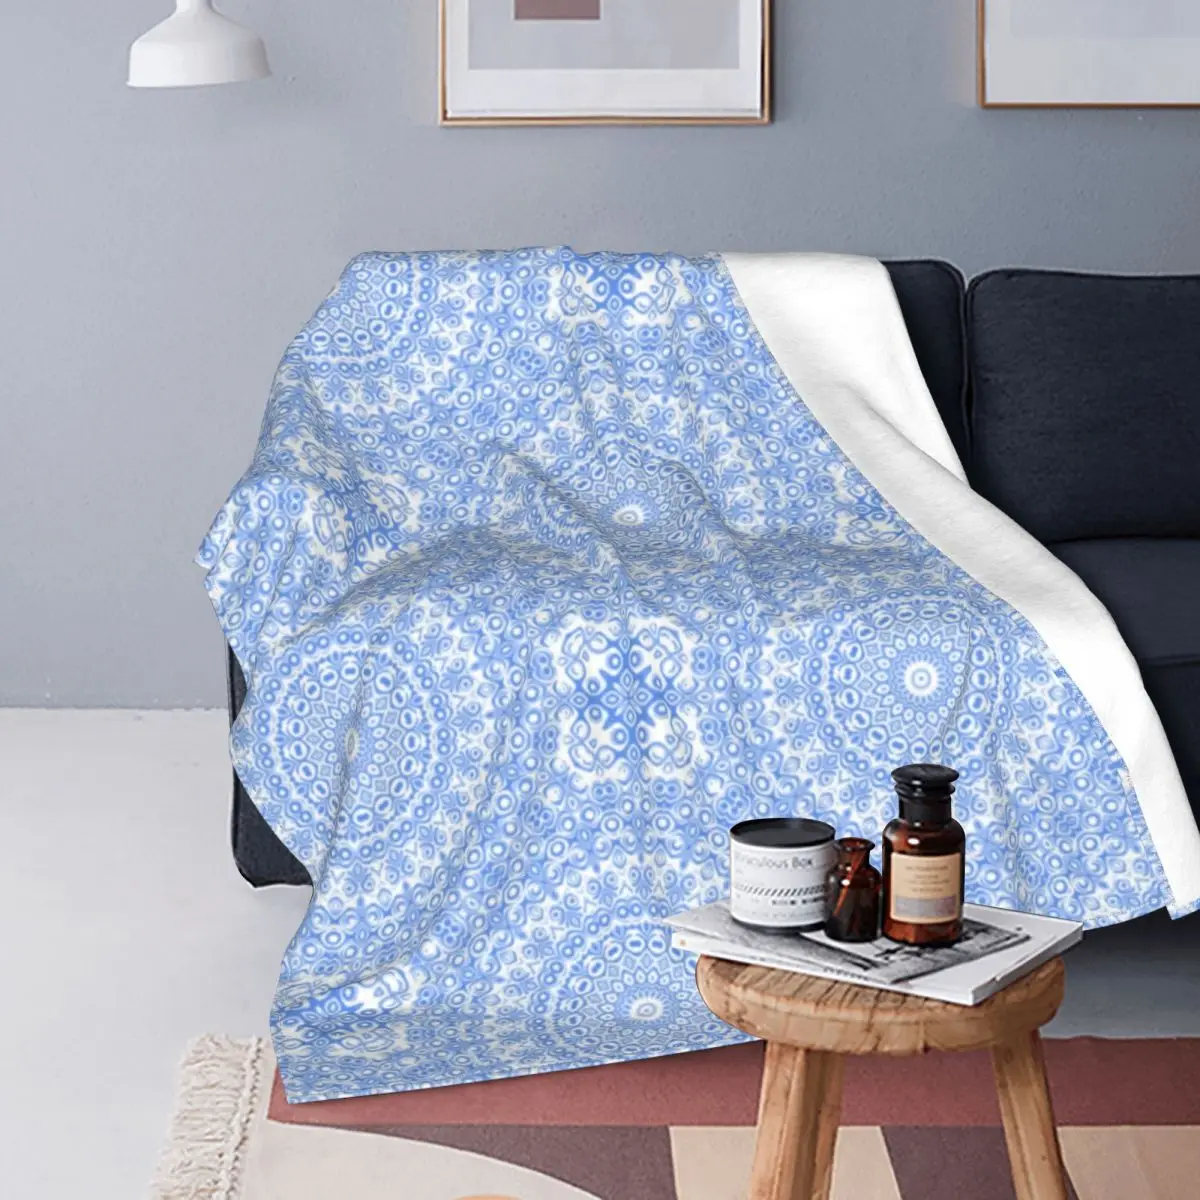 

Mandala Fleece Flannel Throw Design King Queen Full Size for Bed Couch Sofa Super Soft Lightweight All Seasons Warm Blanket Art